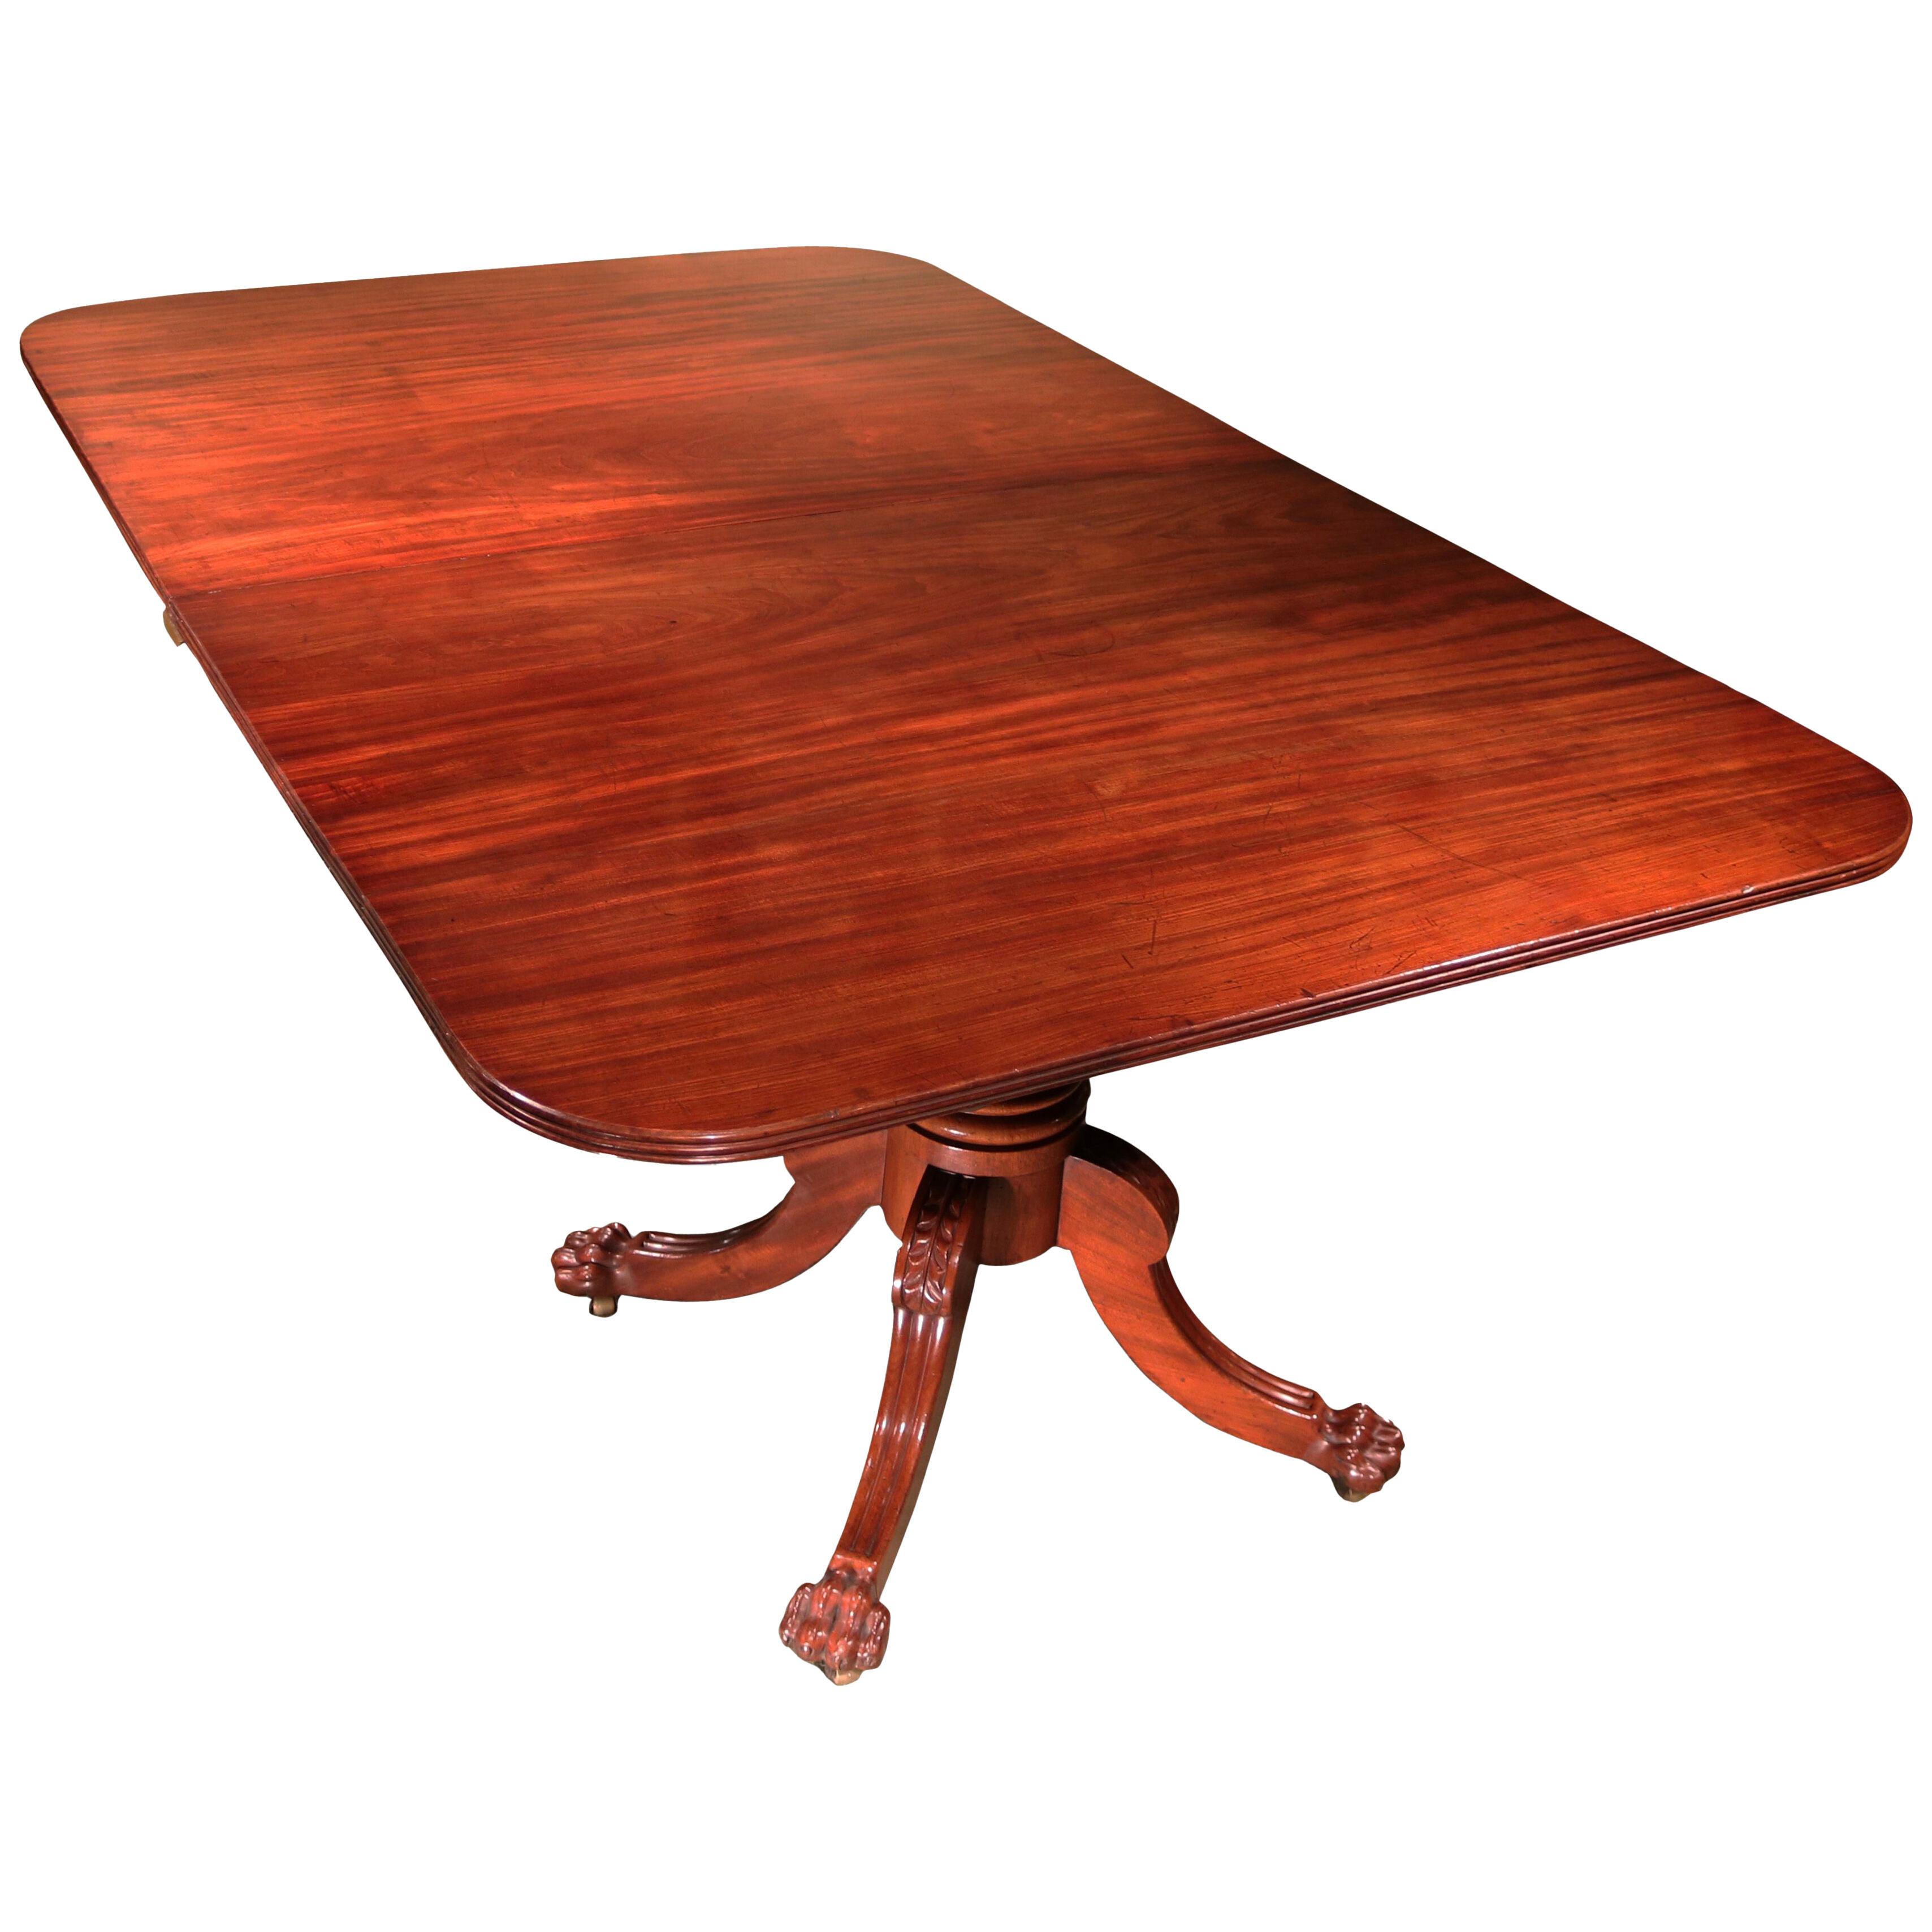 A Regency period mahogany two pillar dining table